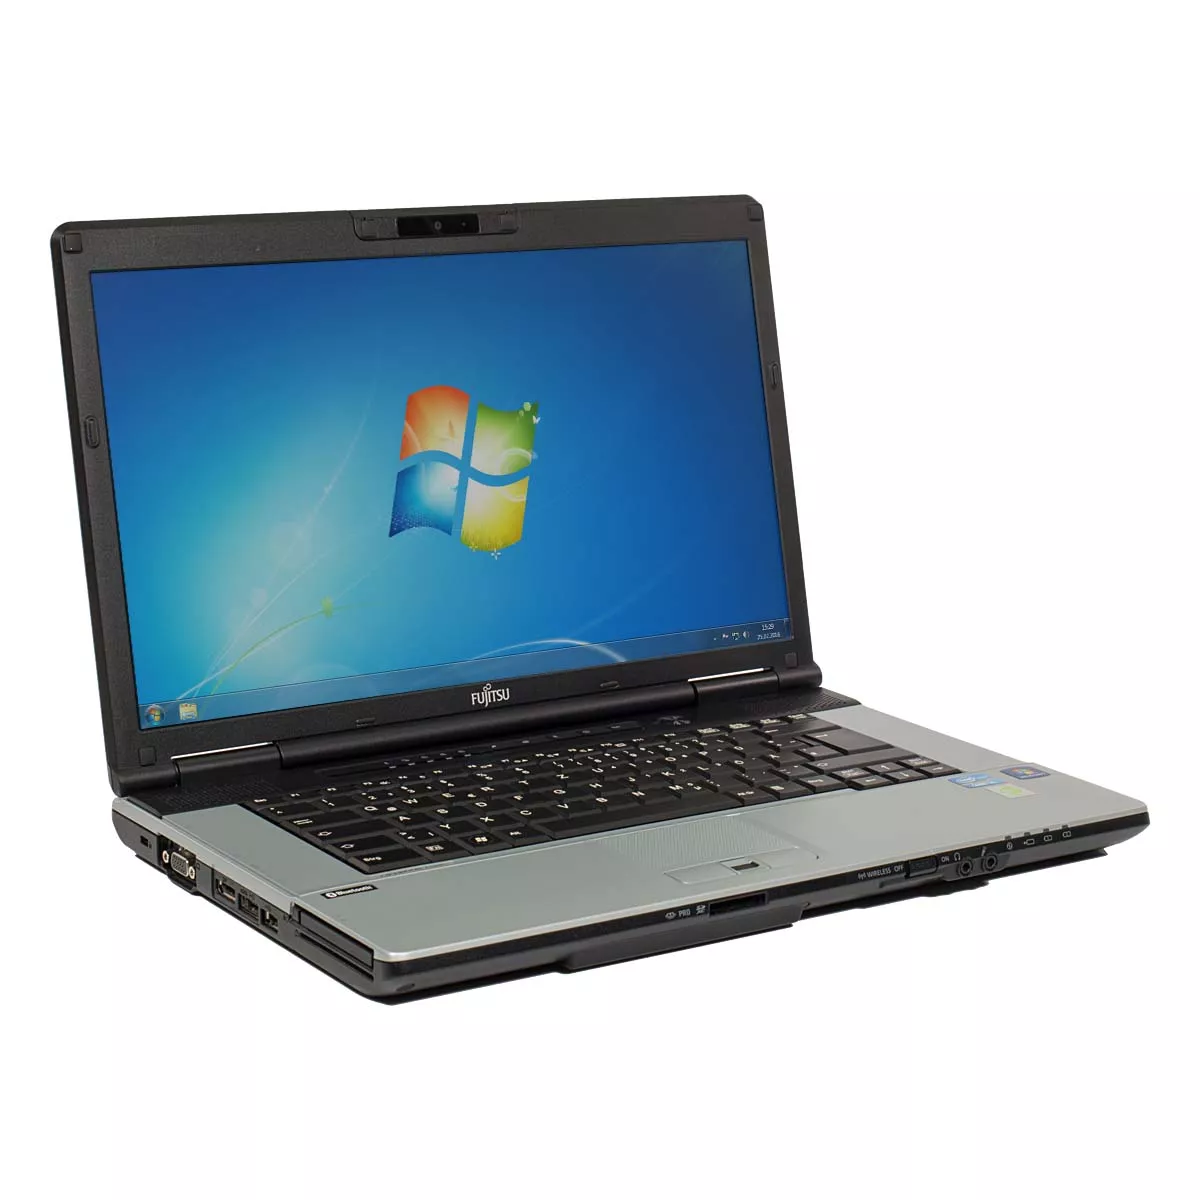 Fujitsu Lifebook E751 Core i5 2520M 2,50 GHz A